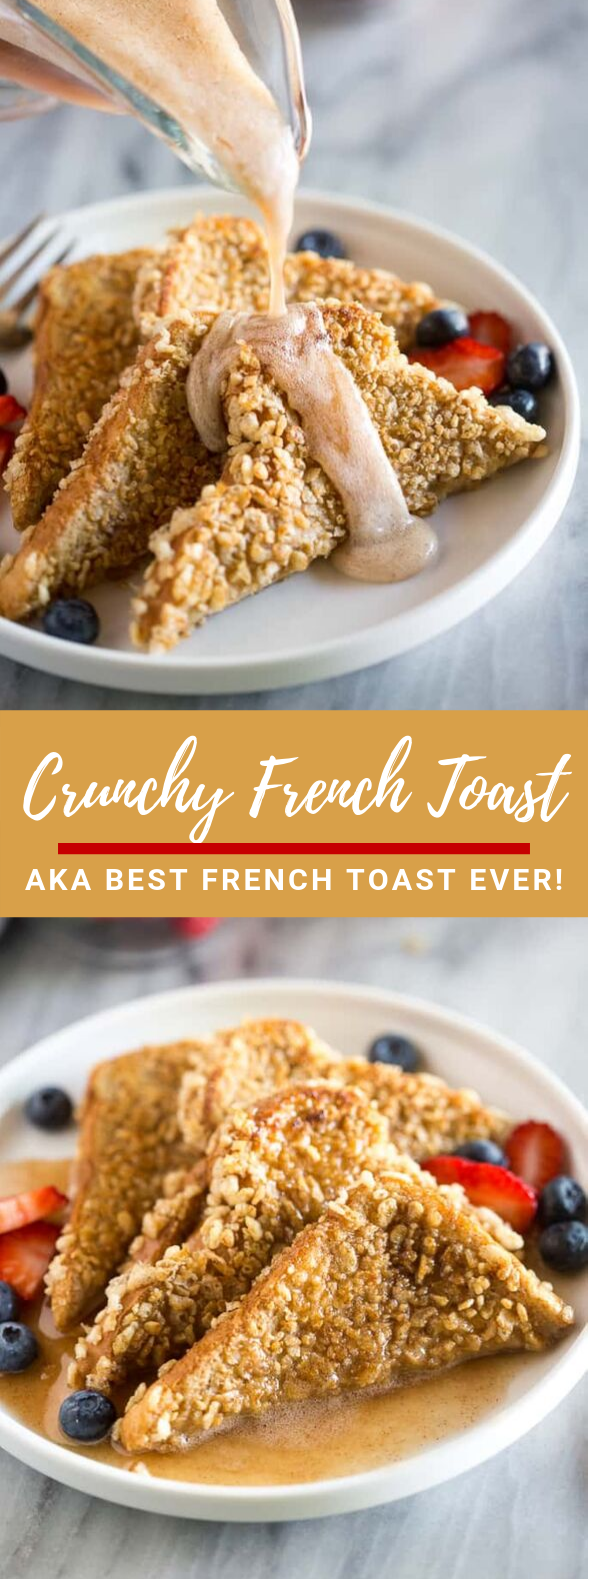 CRUNCHY FRENCH TOAST #recipes #breakfast